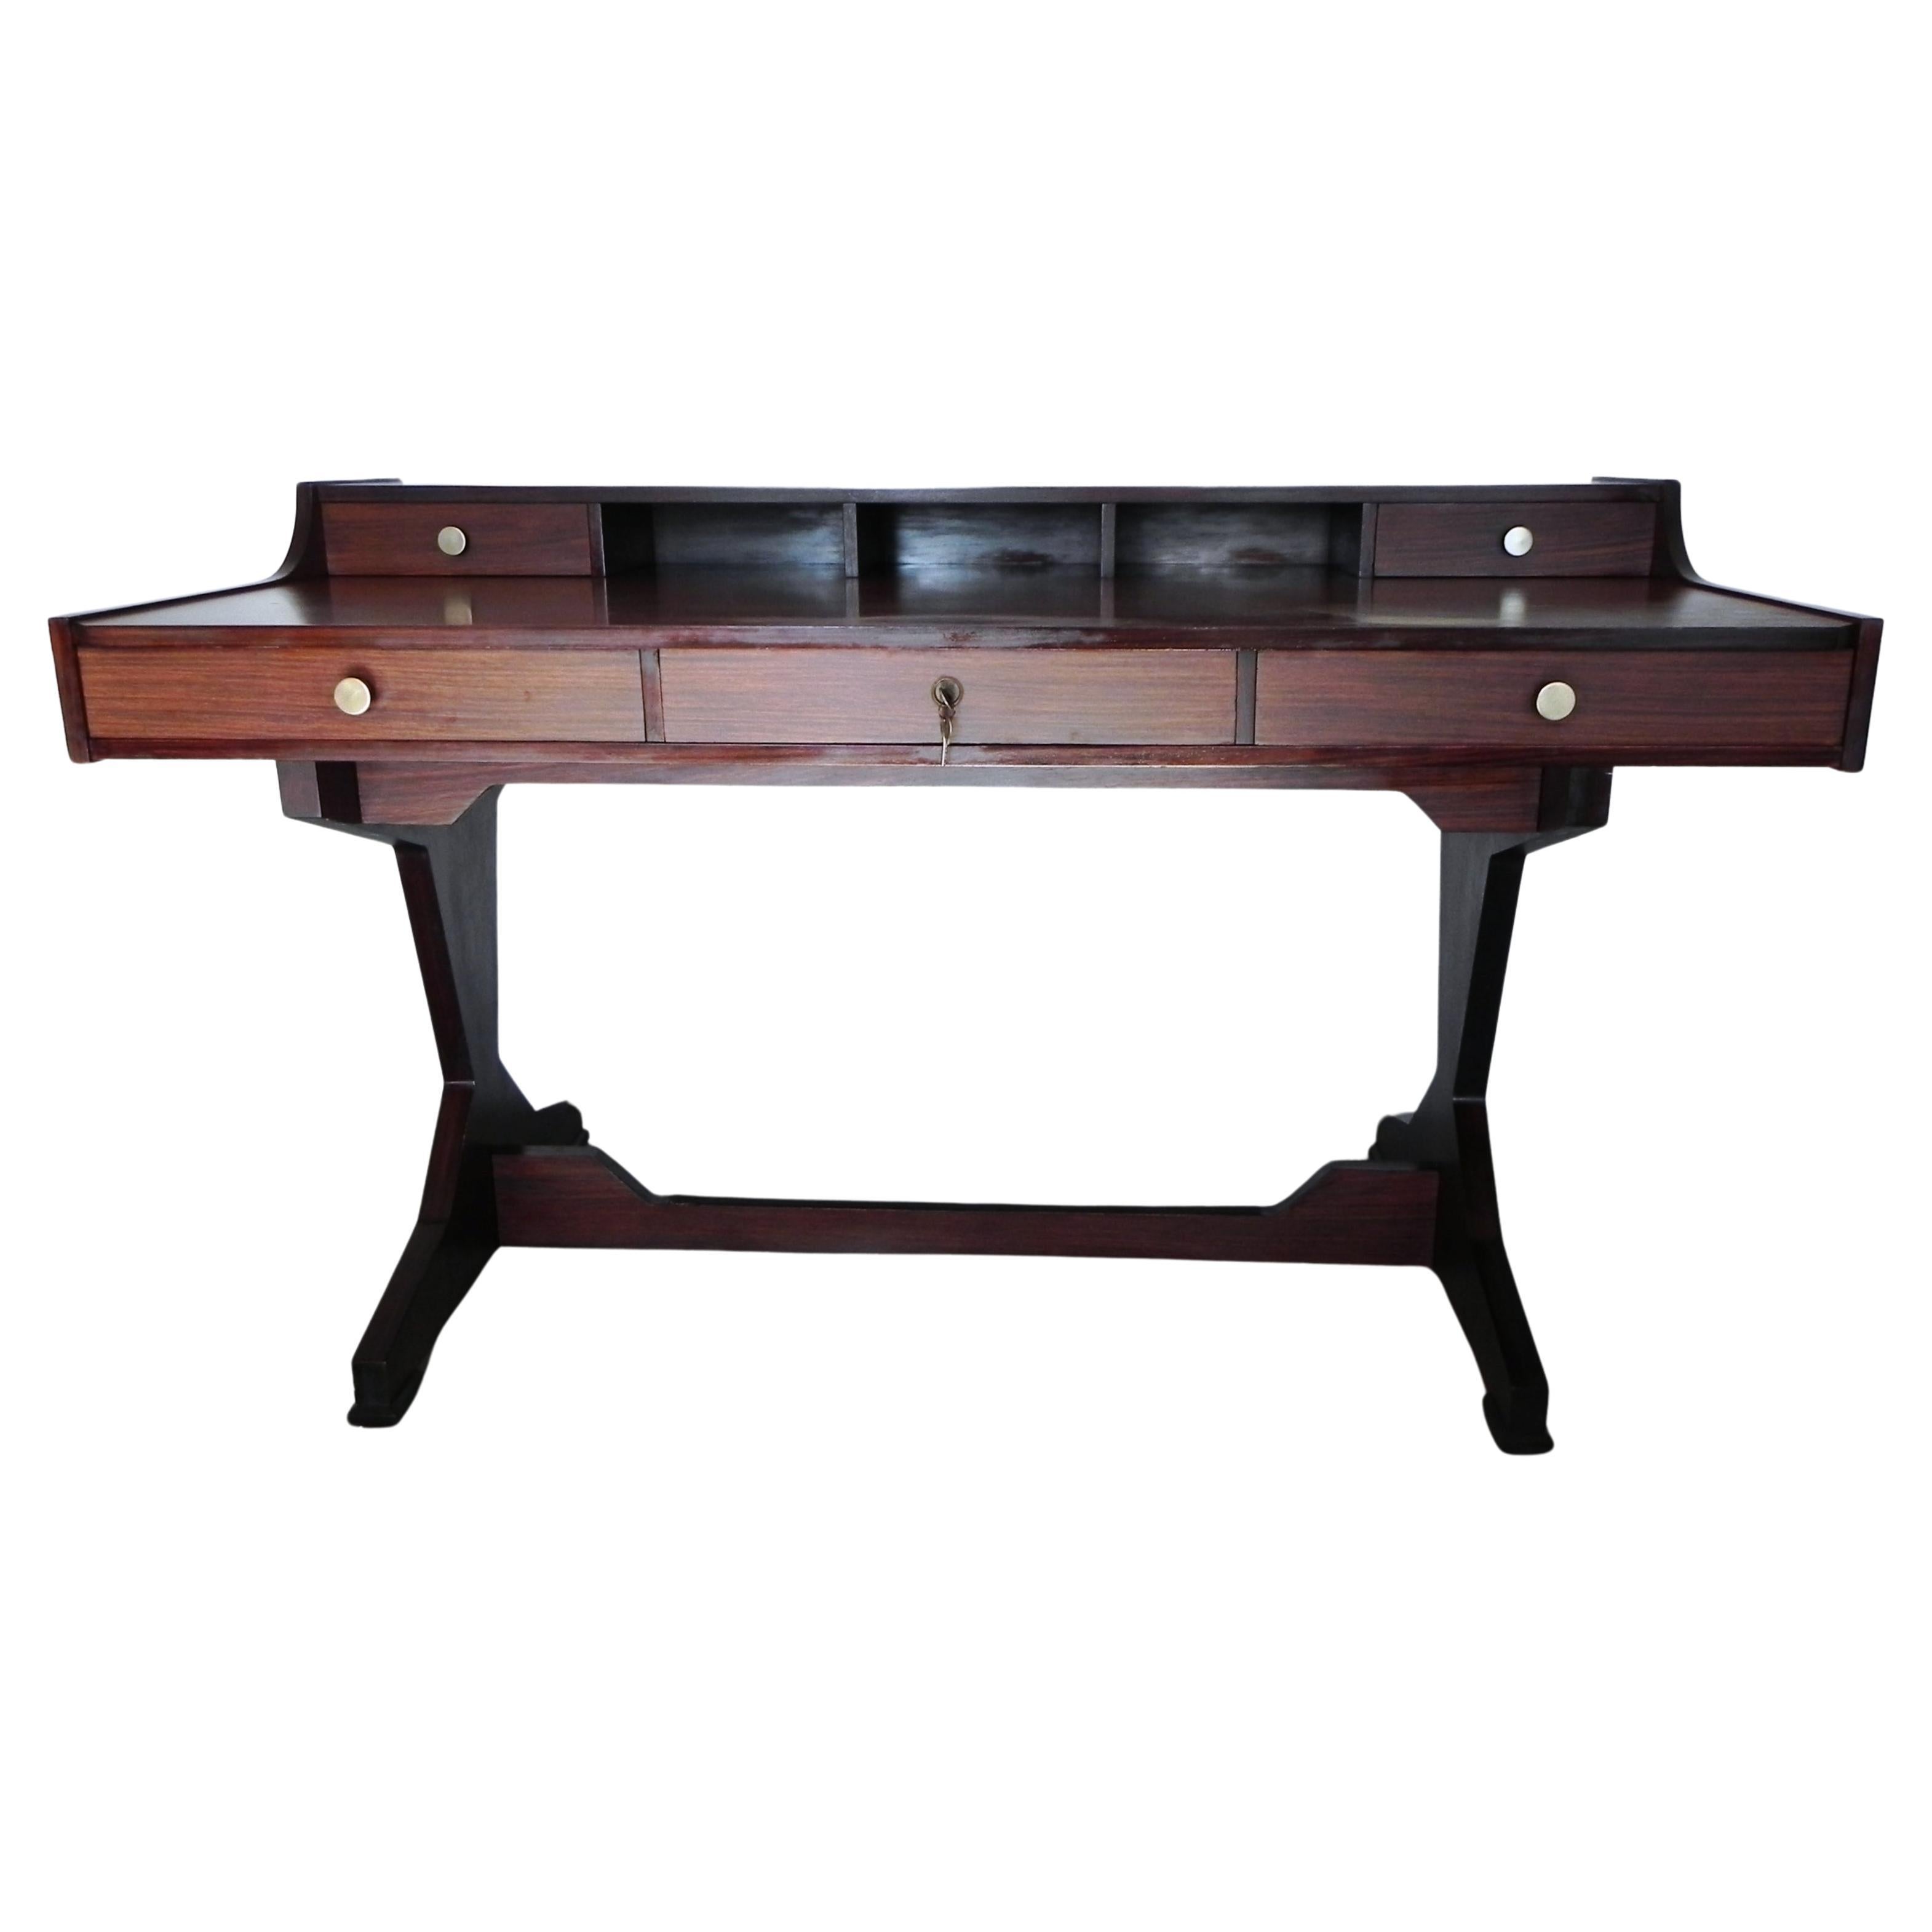 60s desk, Frattini style For Sale